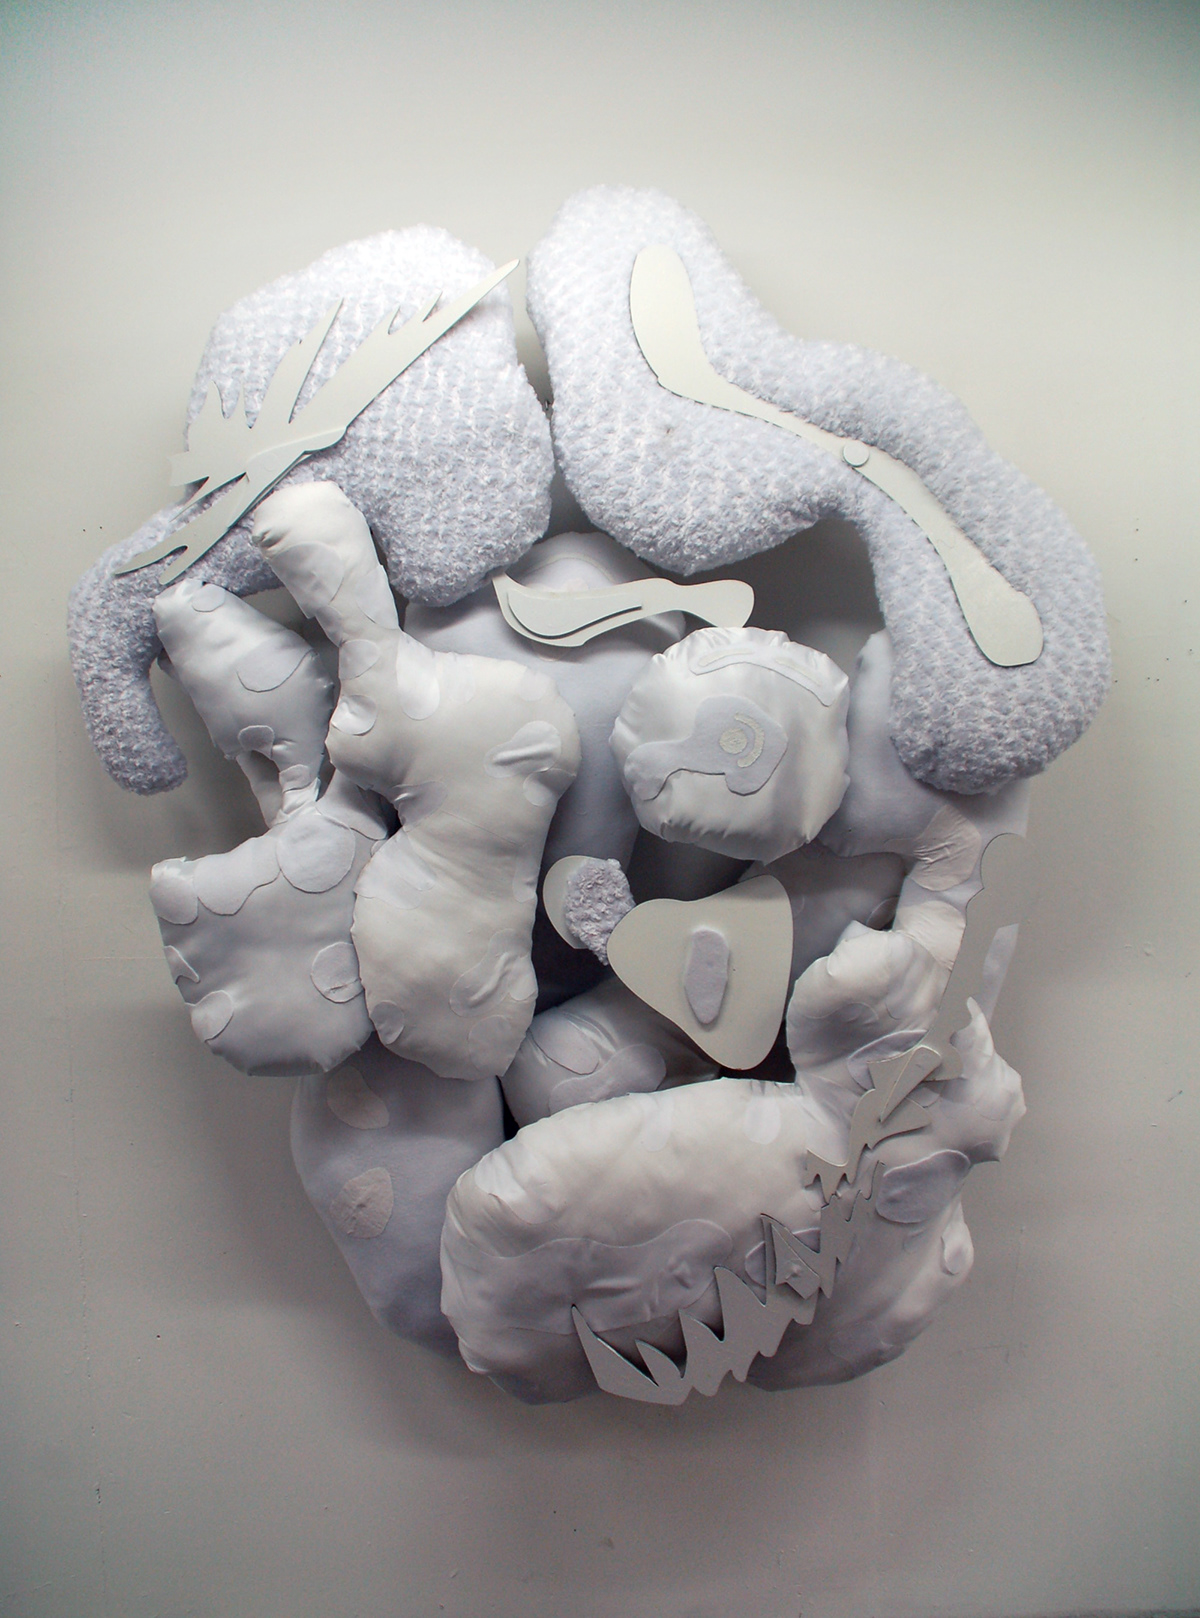 StephenDOnofrio Donofrio d'onofrio SAIC fiber fiber art sculpture Stephen DOnofrio soft sculpture